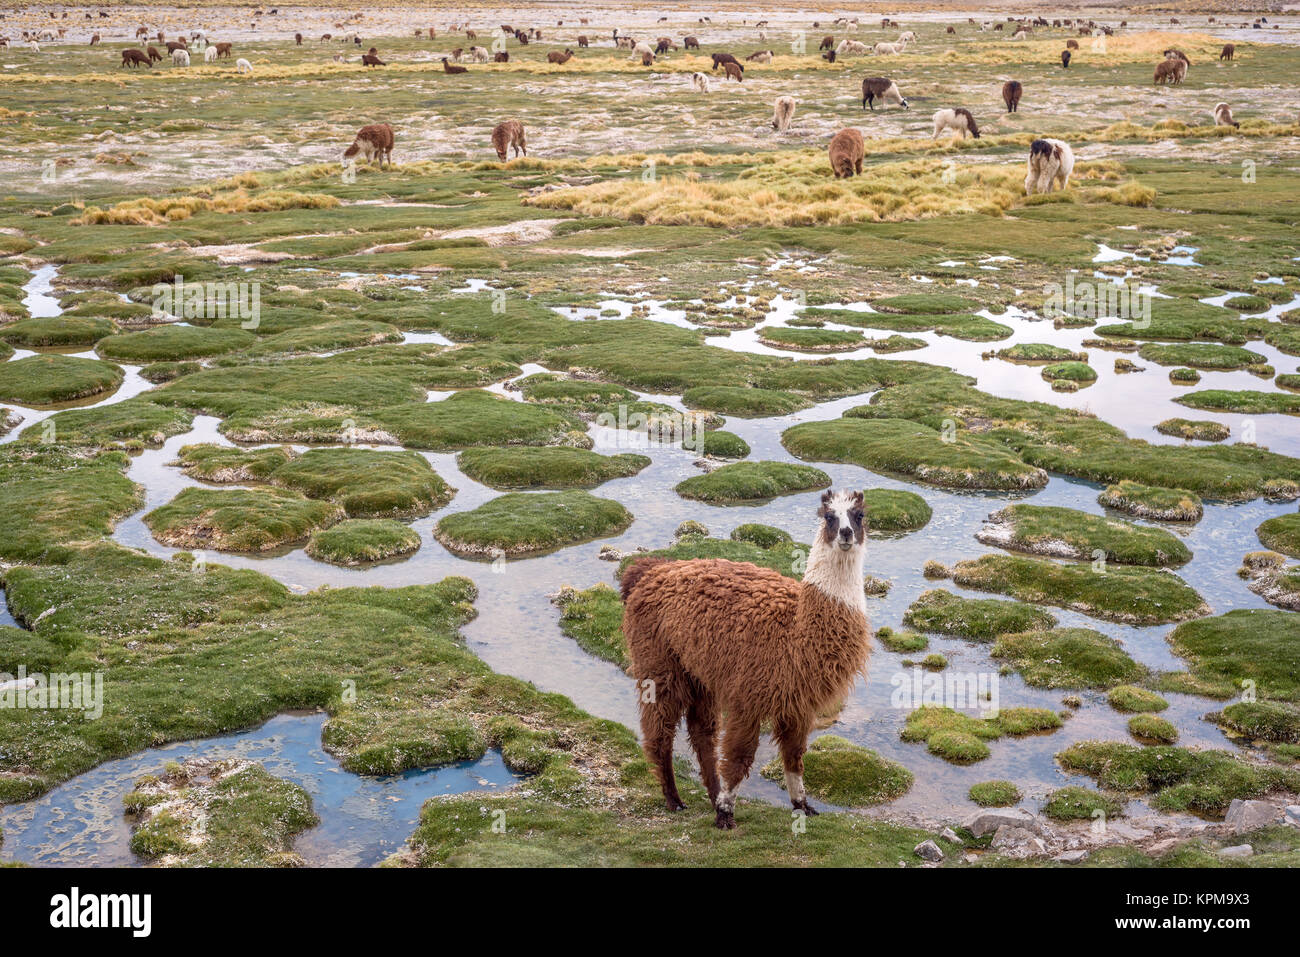 Llamas in the mountains near Paso de Jama, Argentina-Chile Stock Photo